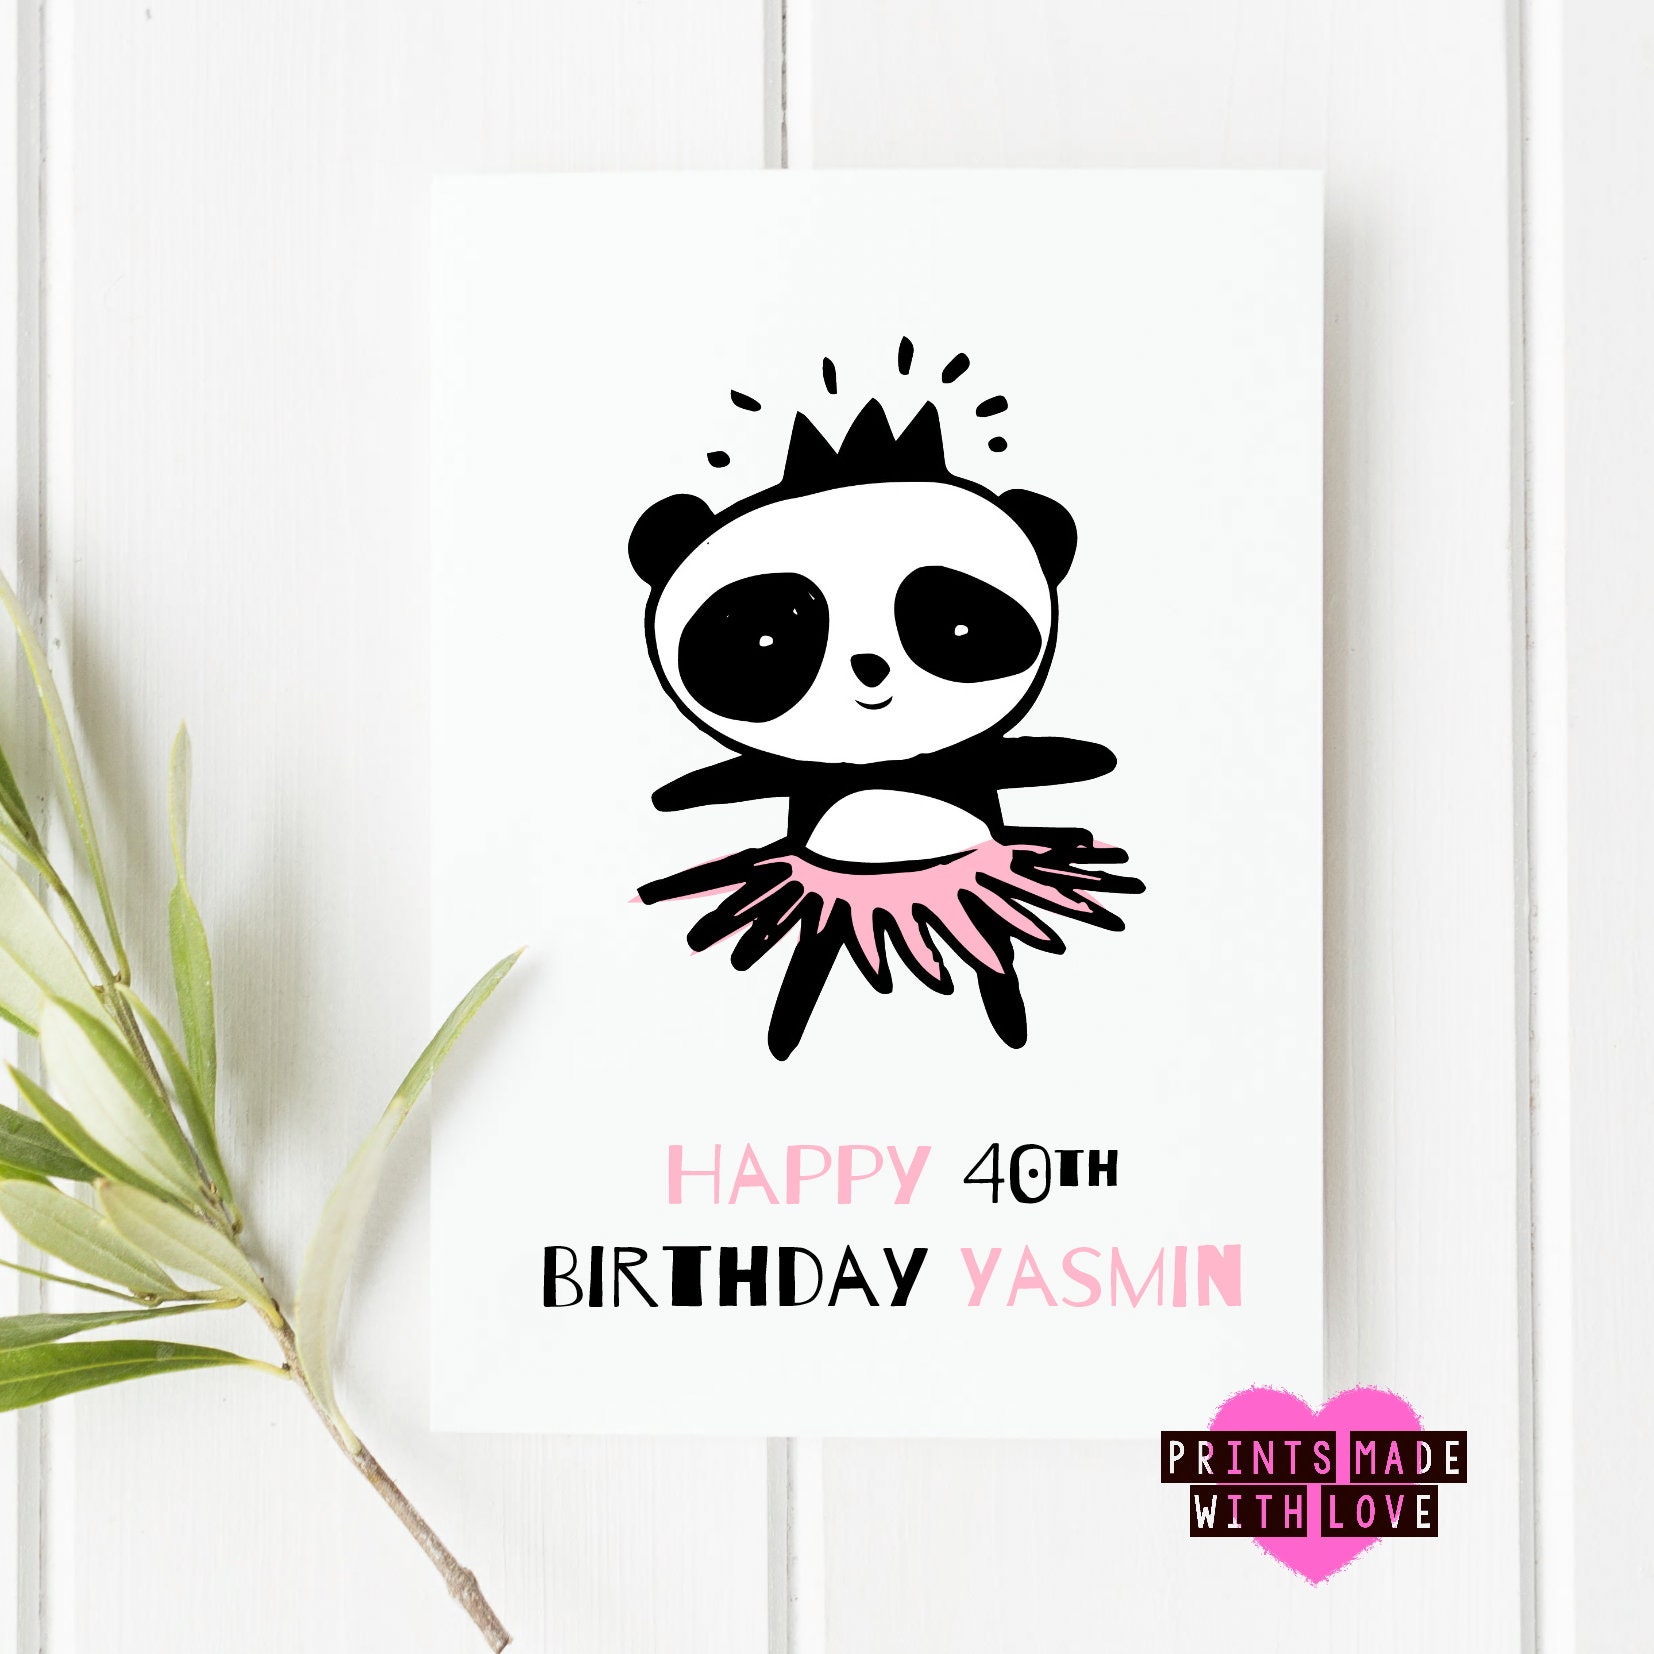 Funny Birthday Card, Printable Panda 'pandemic' Birthday Greetings Card,  Happy Birthday, Panda Party Greeting, Quarantine Social Distancing 